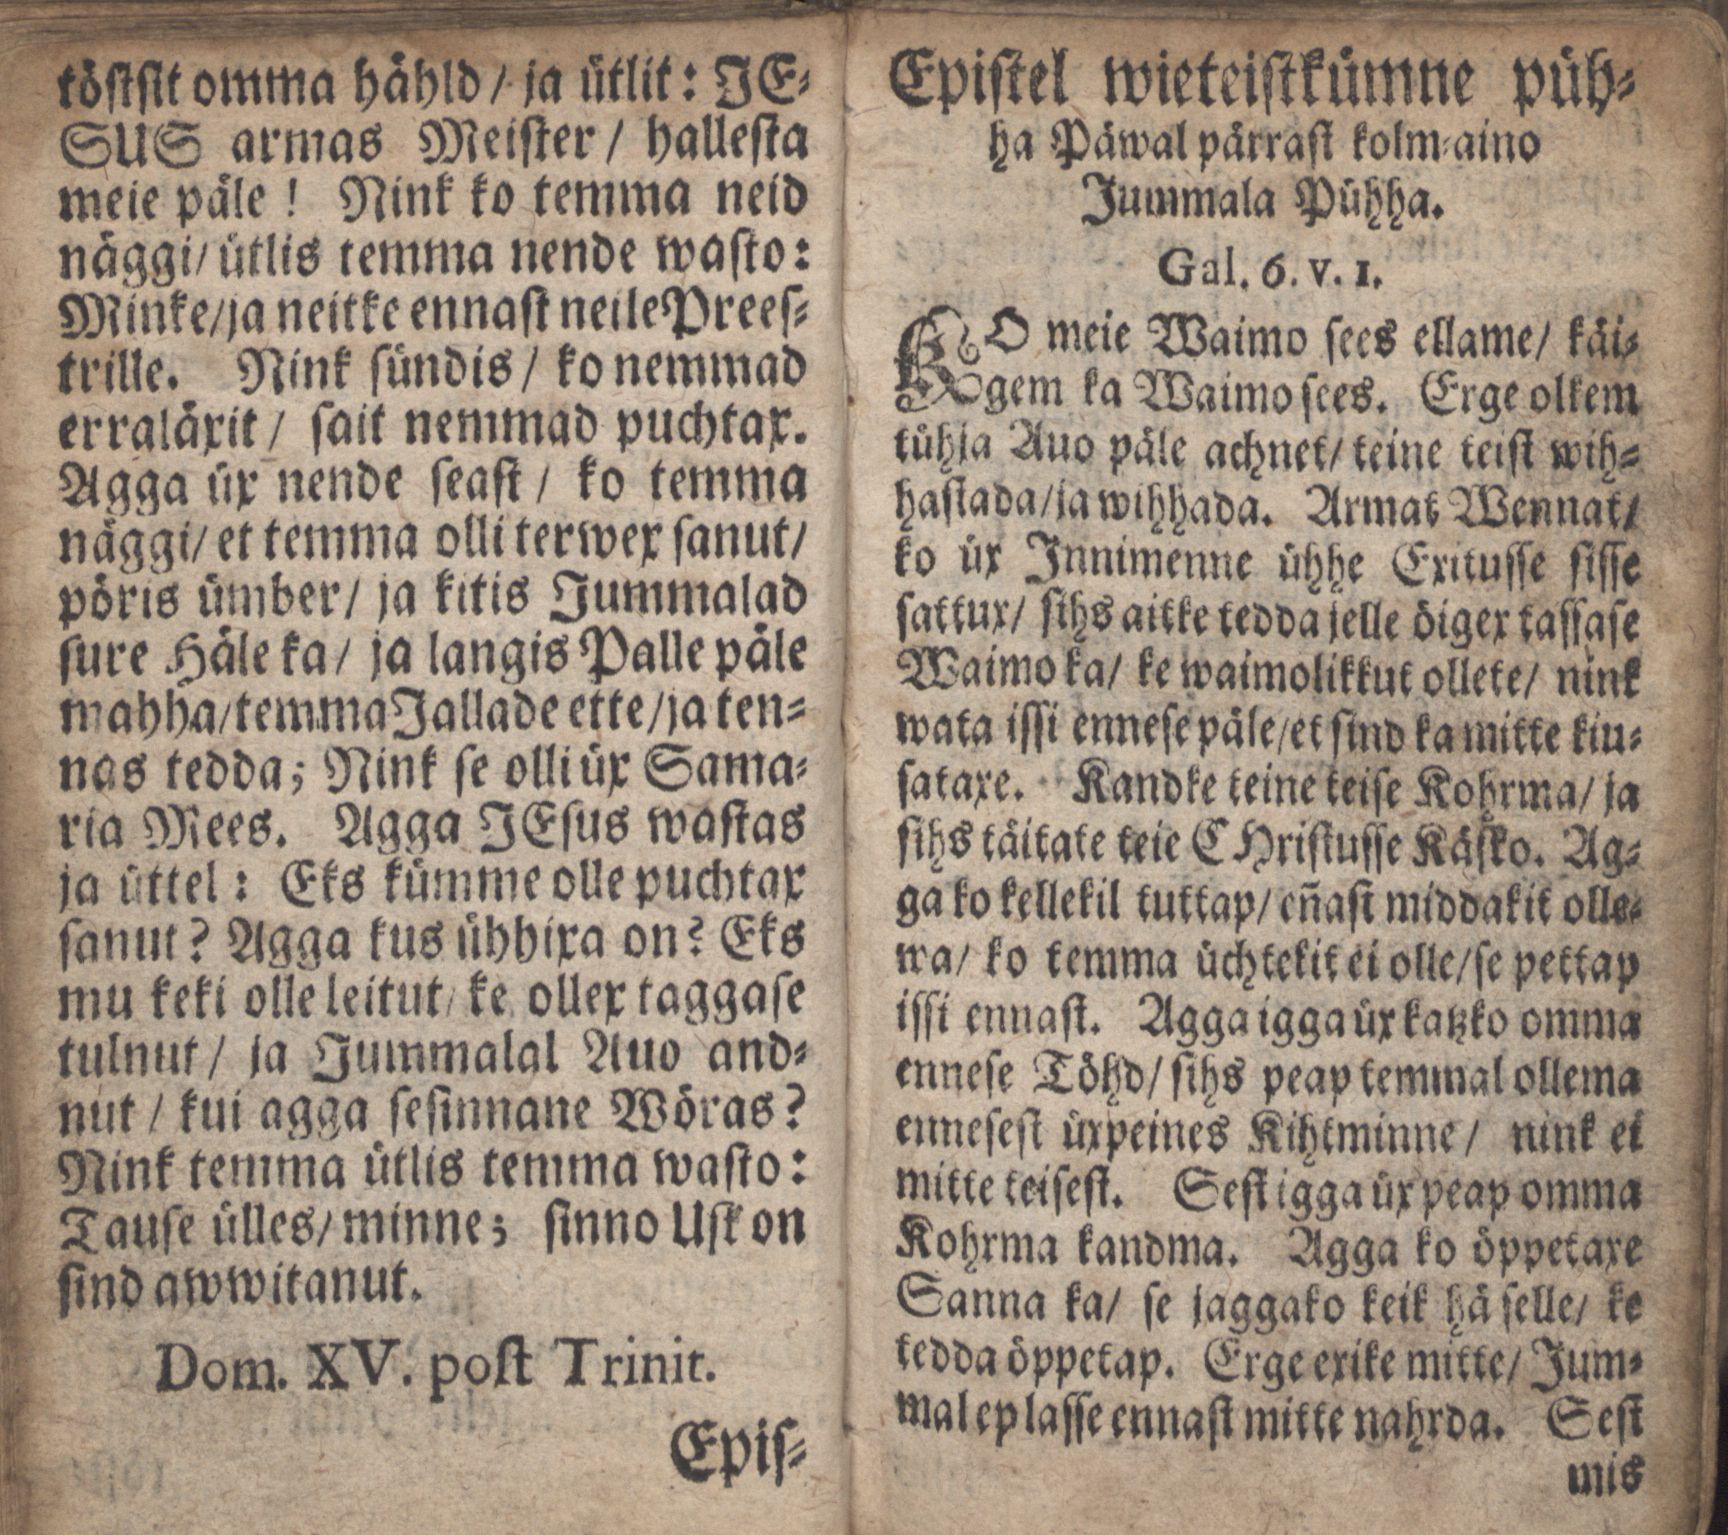 Ewangeliummit Nink Epistlit (1700) | 77. Main body of text